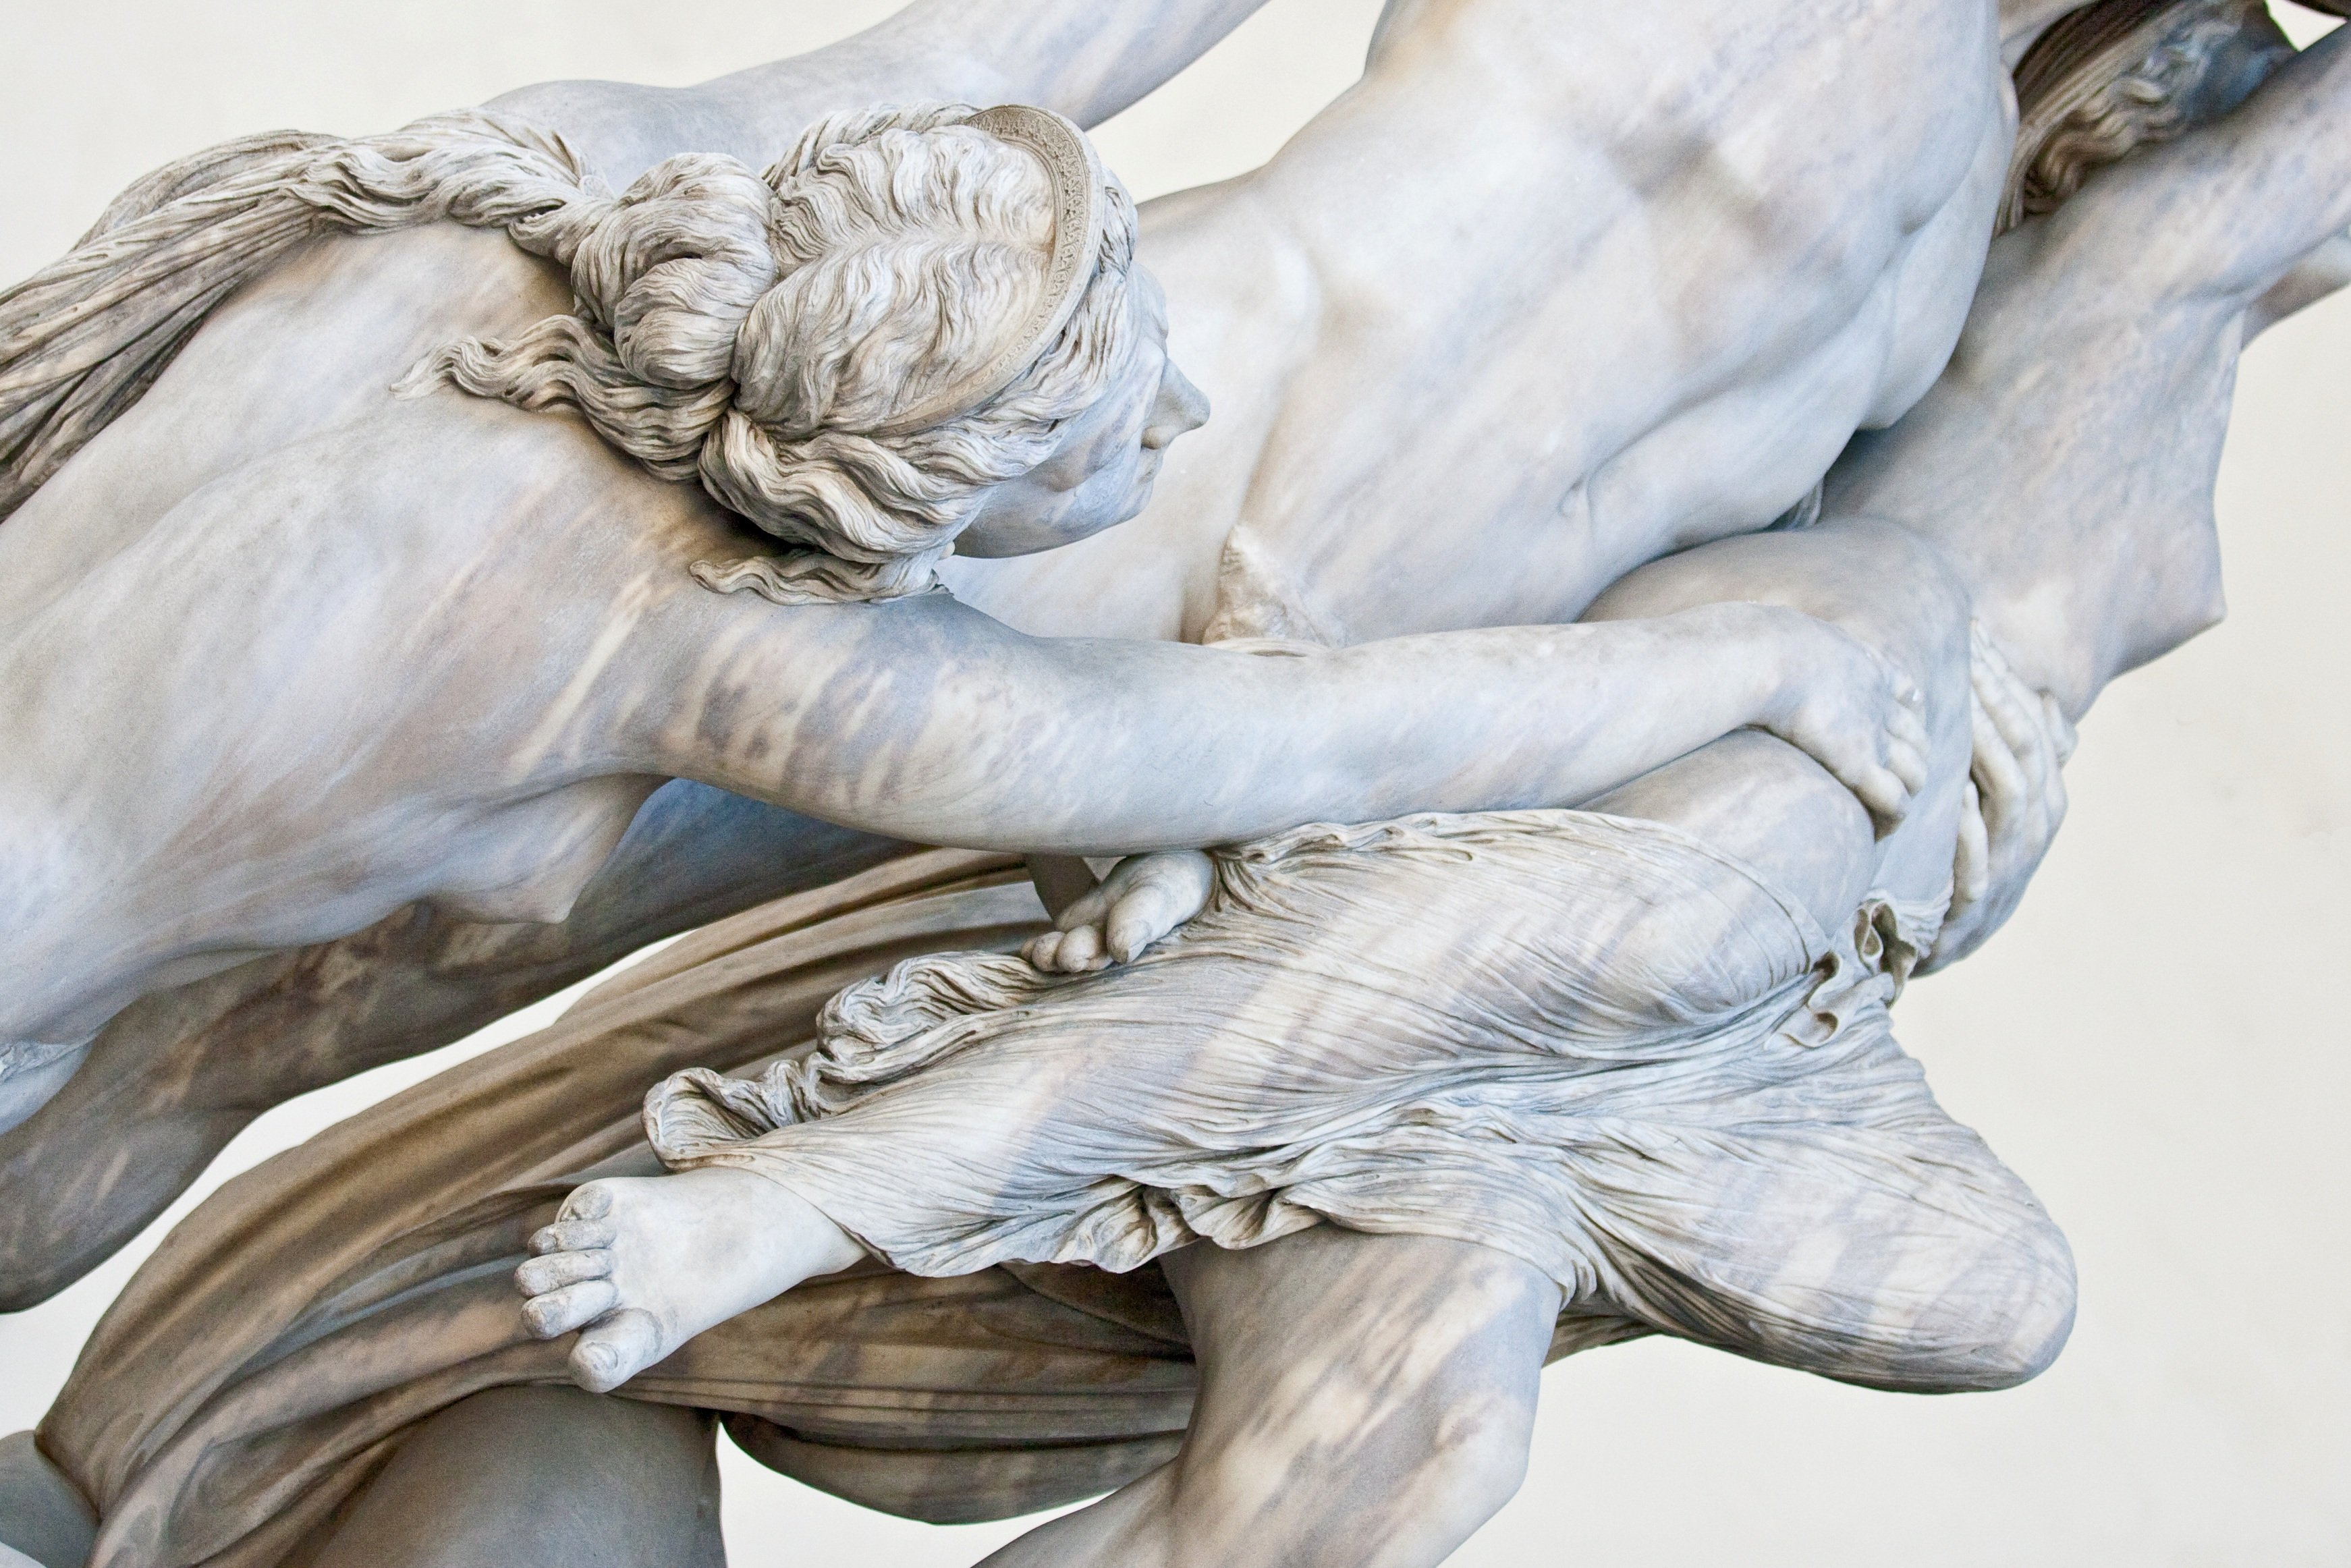 Ренессанс скульптура Микеланджело